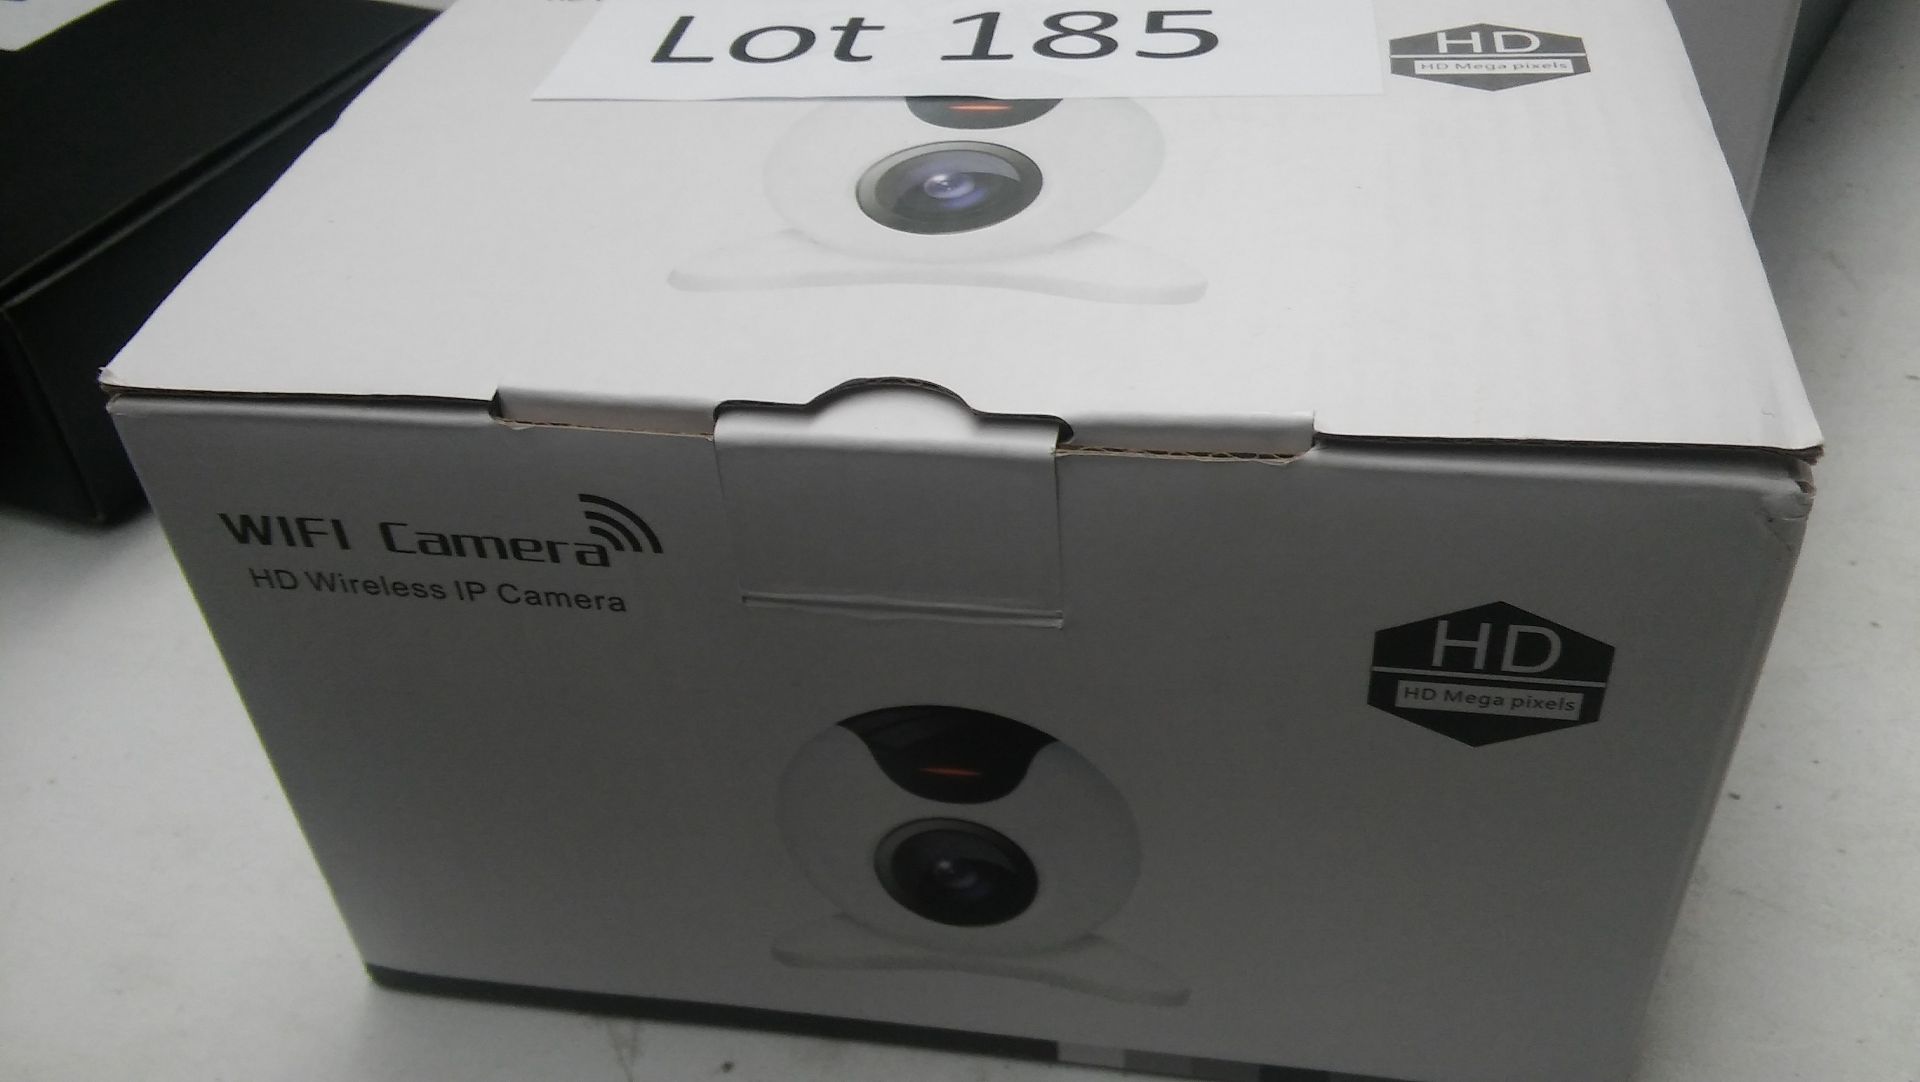 Wifi camera. HD wireless IP camera.As new. RRP -£130.